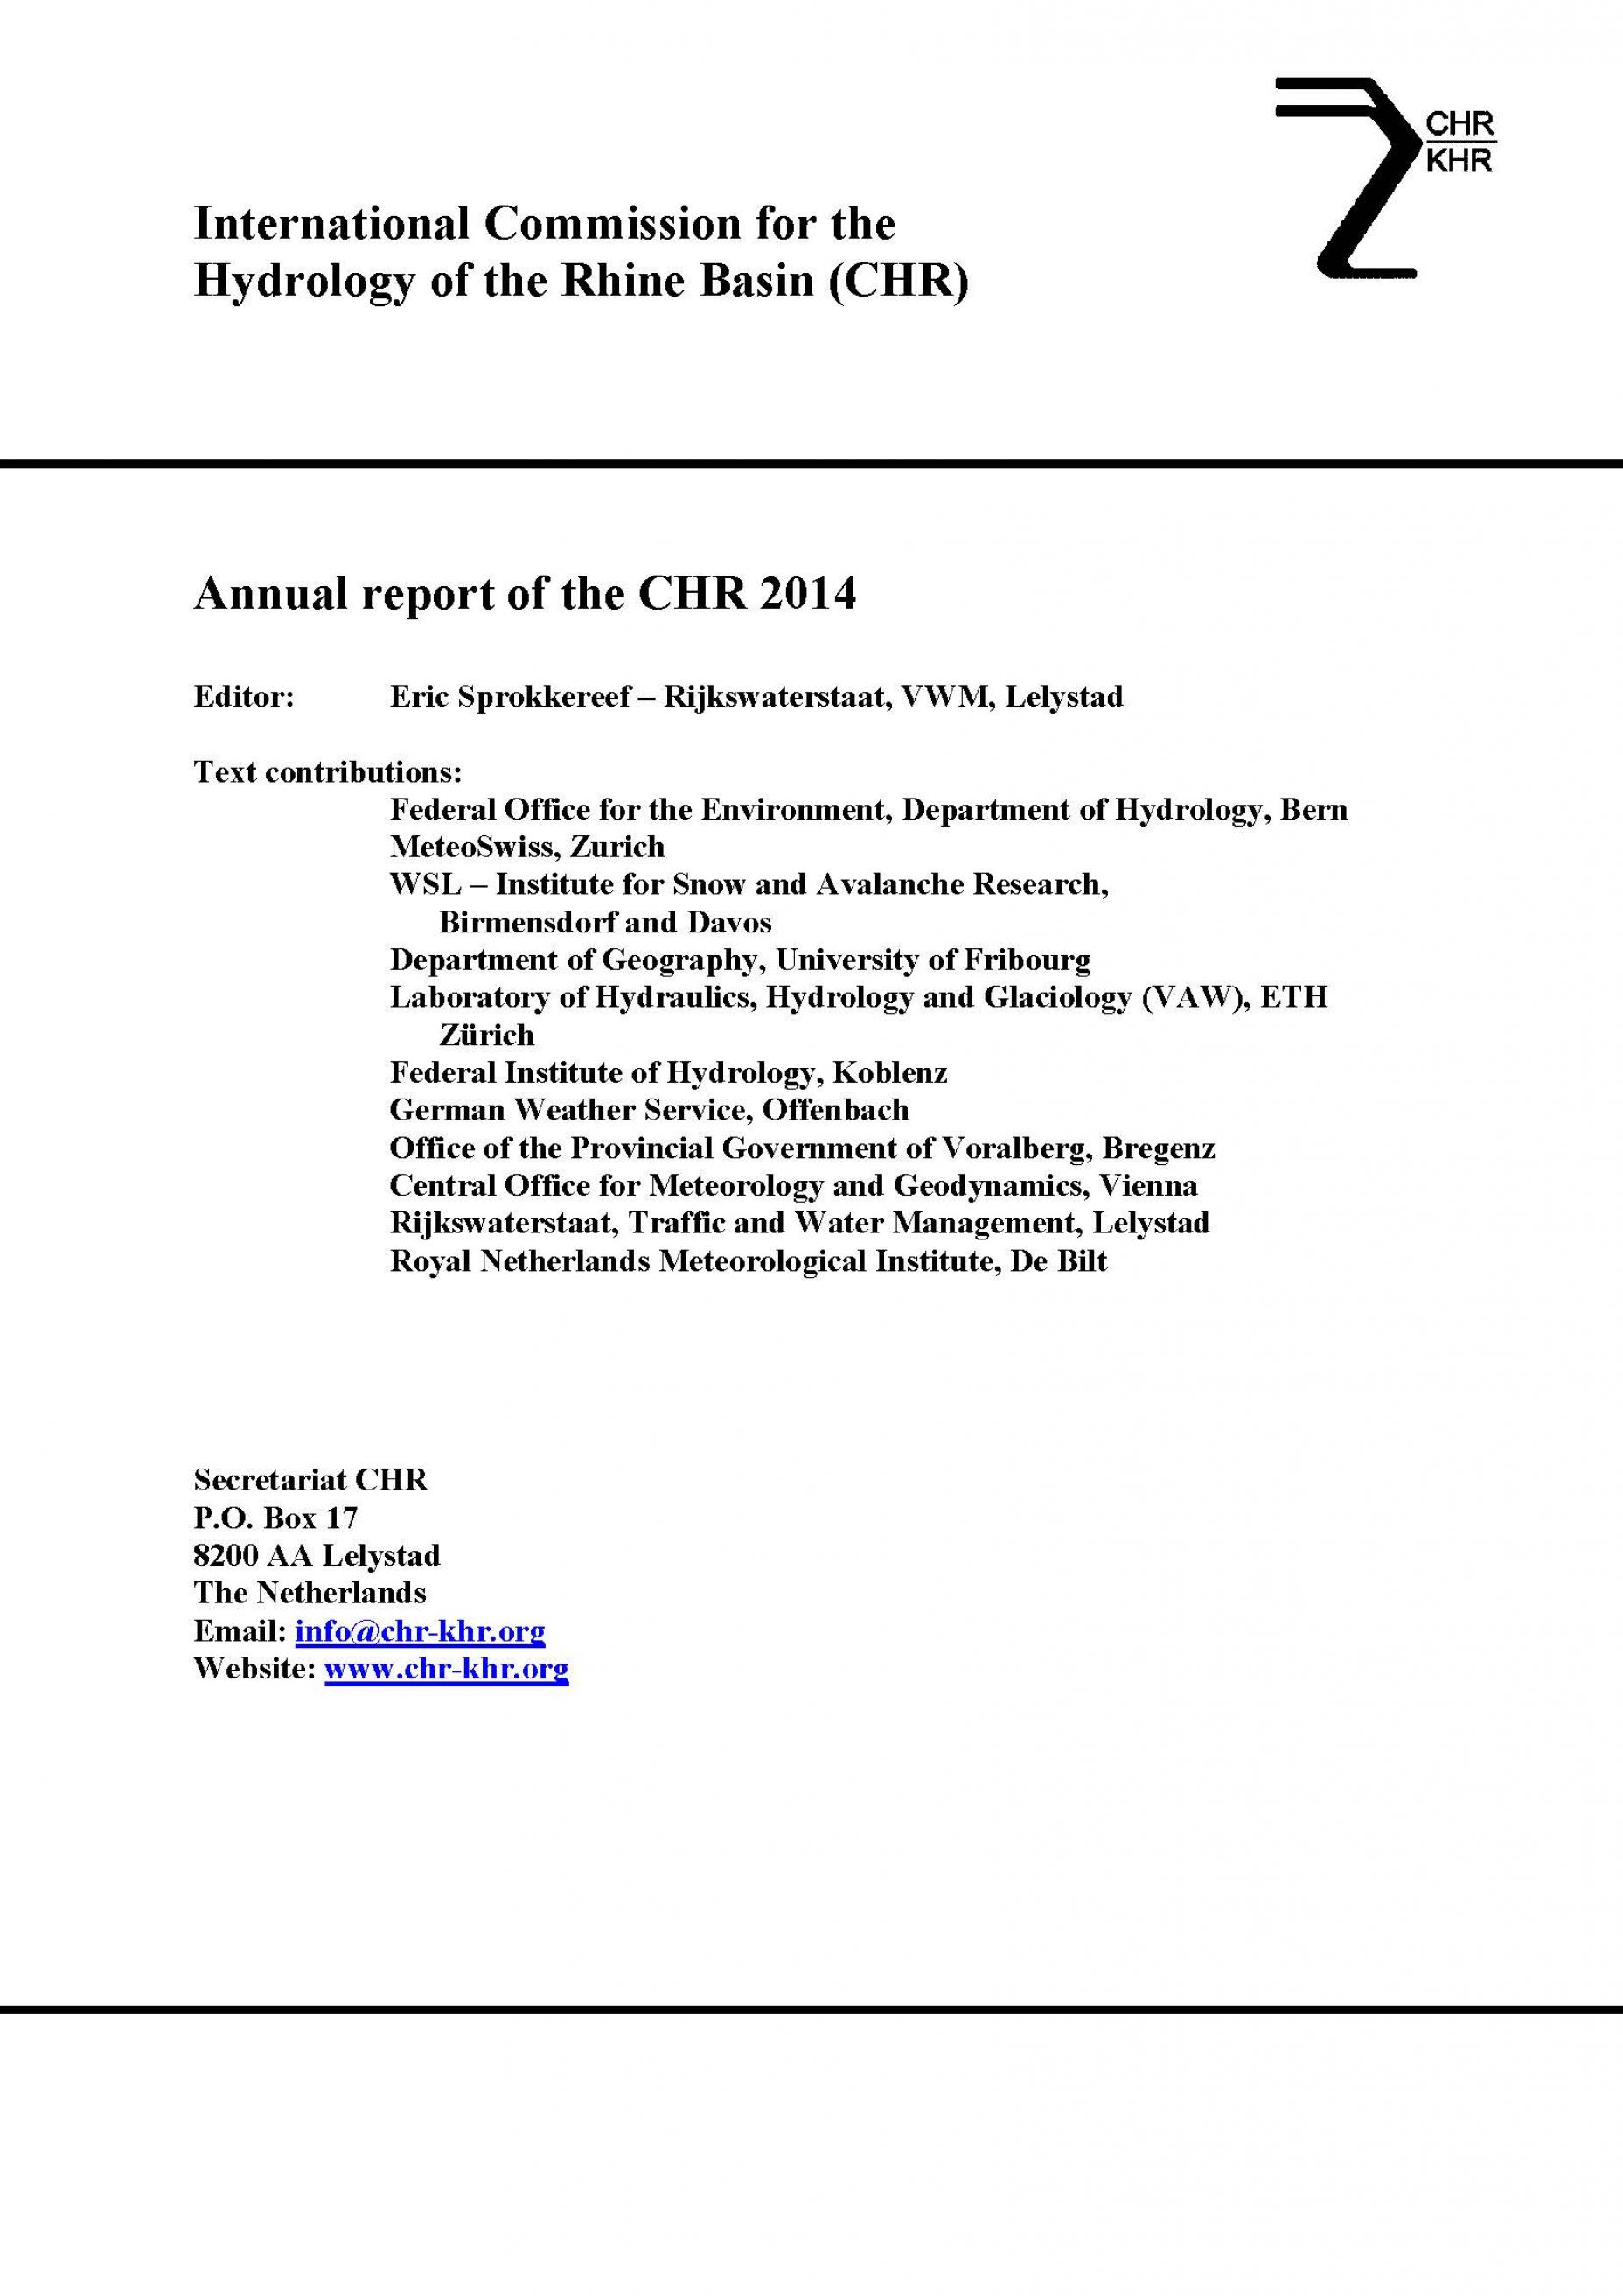 cover_annual_report2014EN